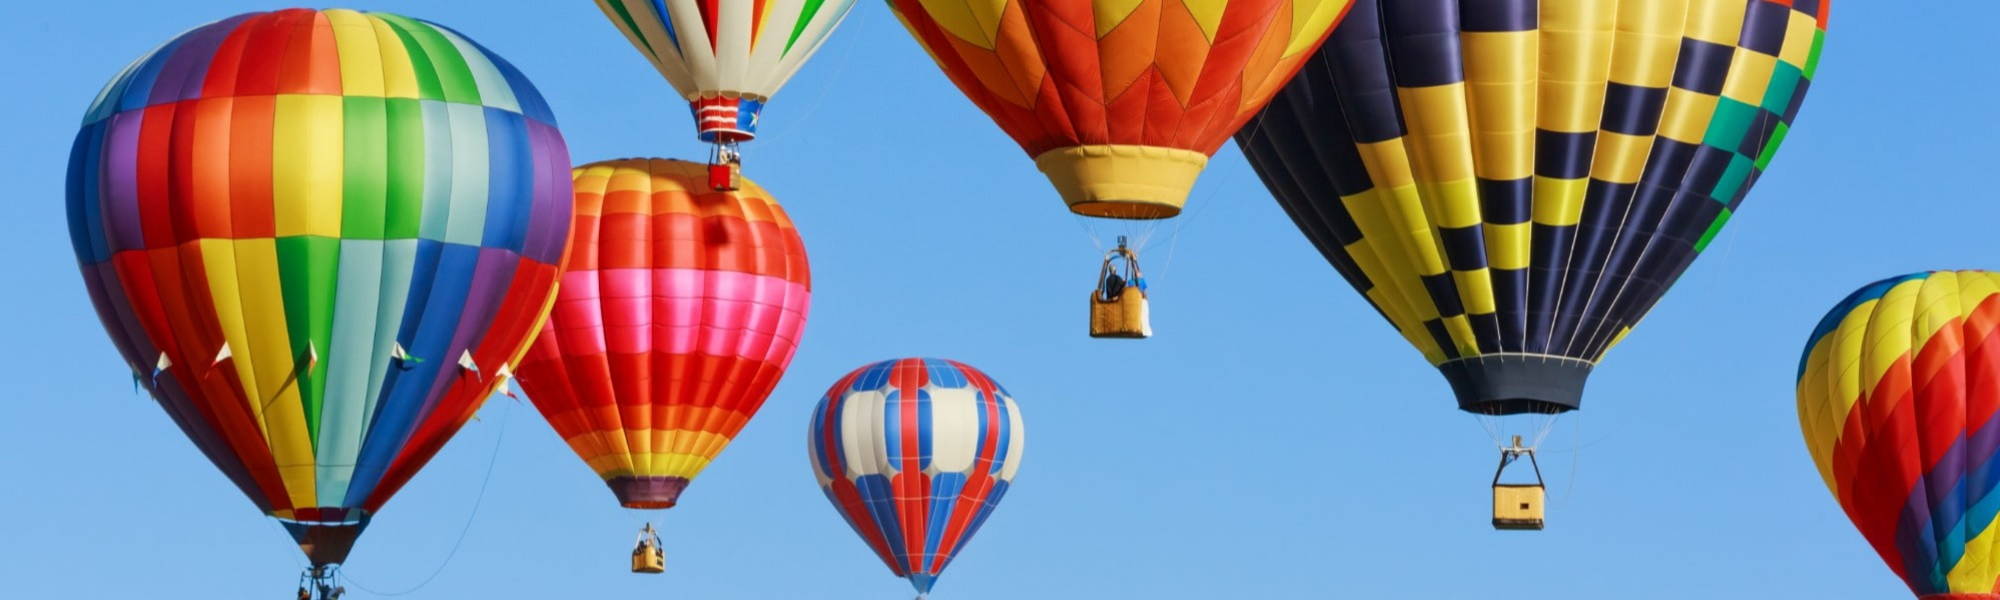 Hot Air balloons against blue sky